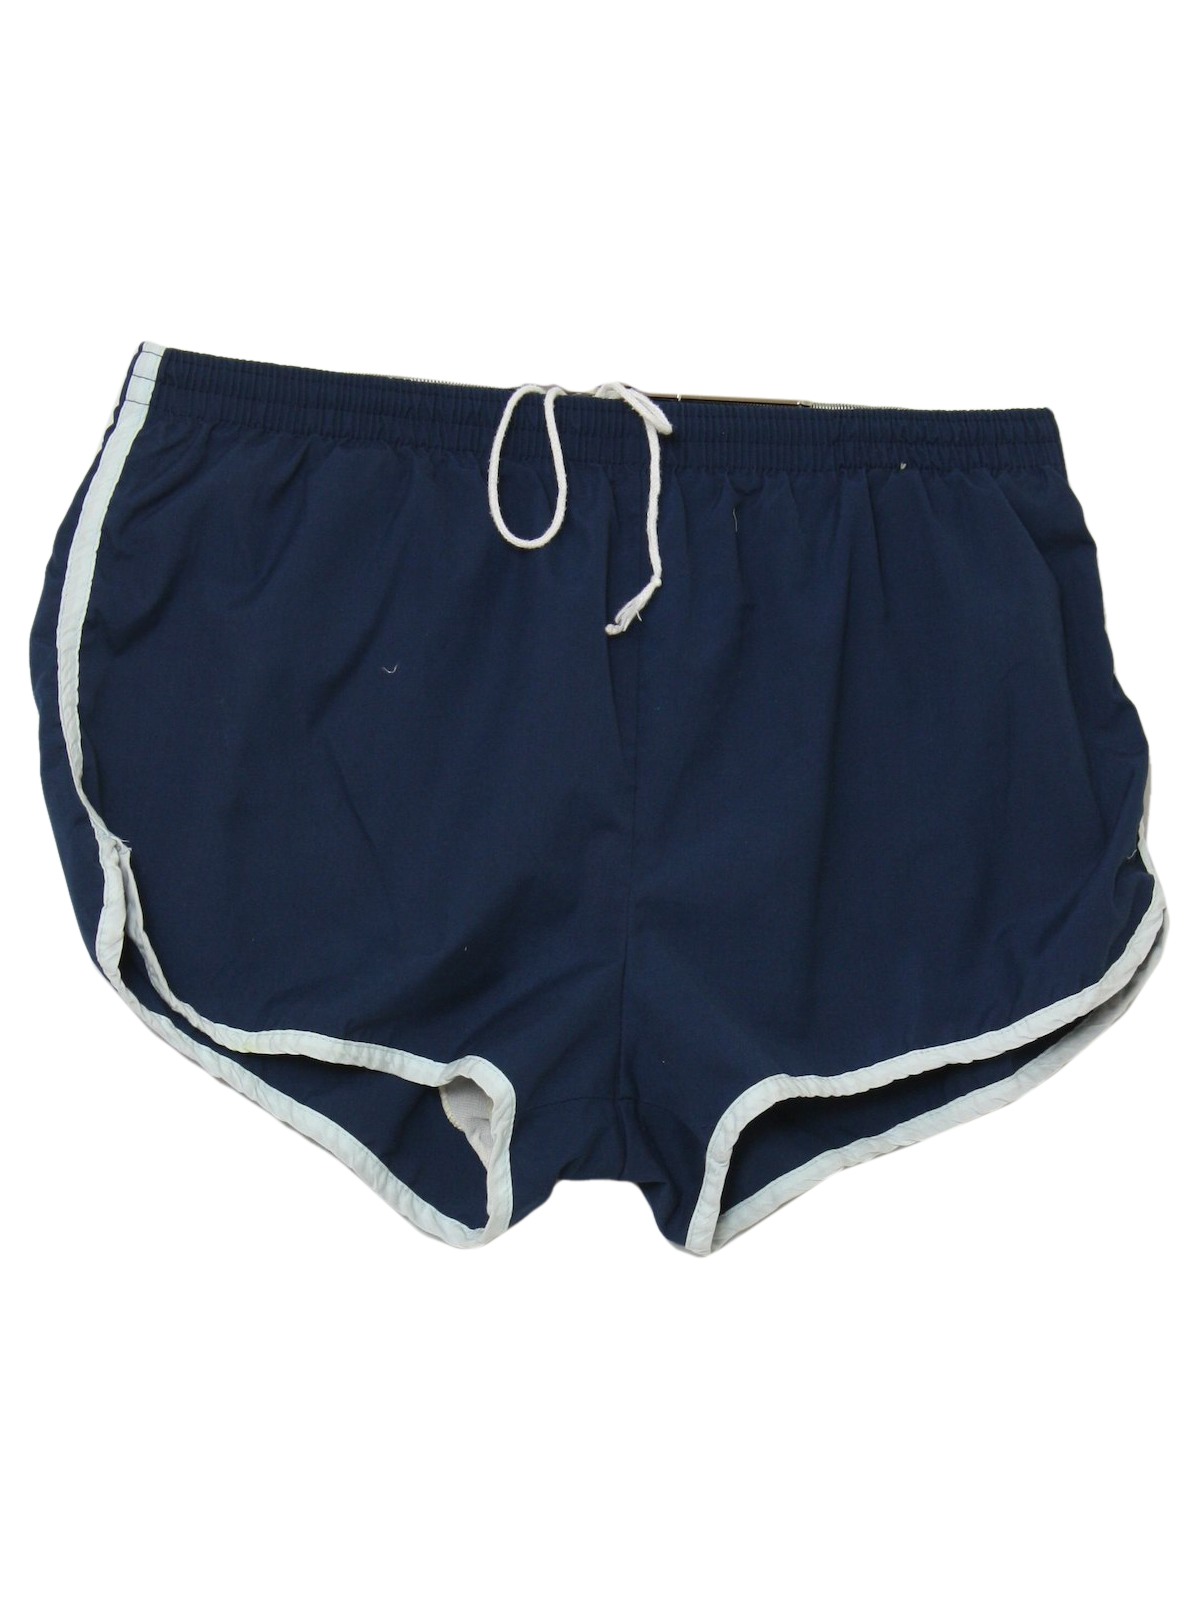 1980s Vintage Swimsuit/Swimwear: 80s -JCPenney- Mens midnight blue ...